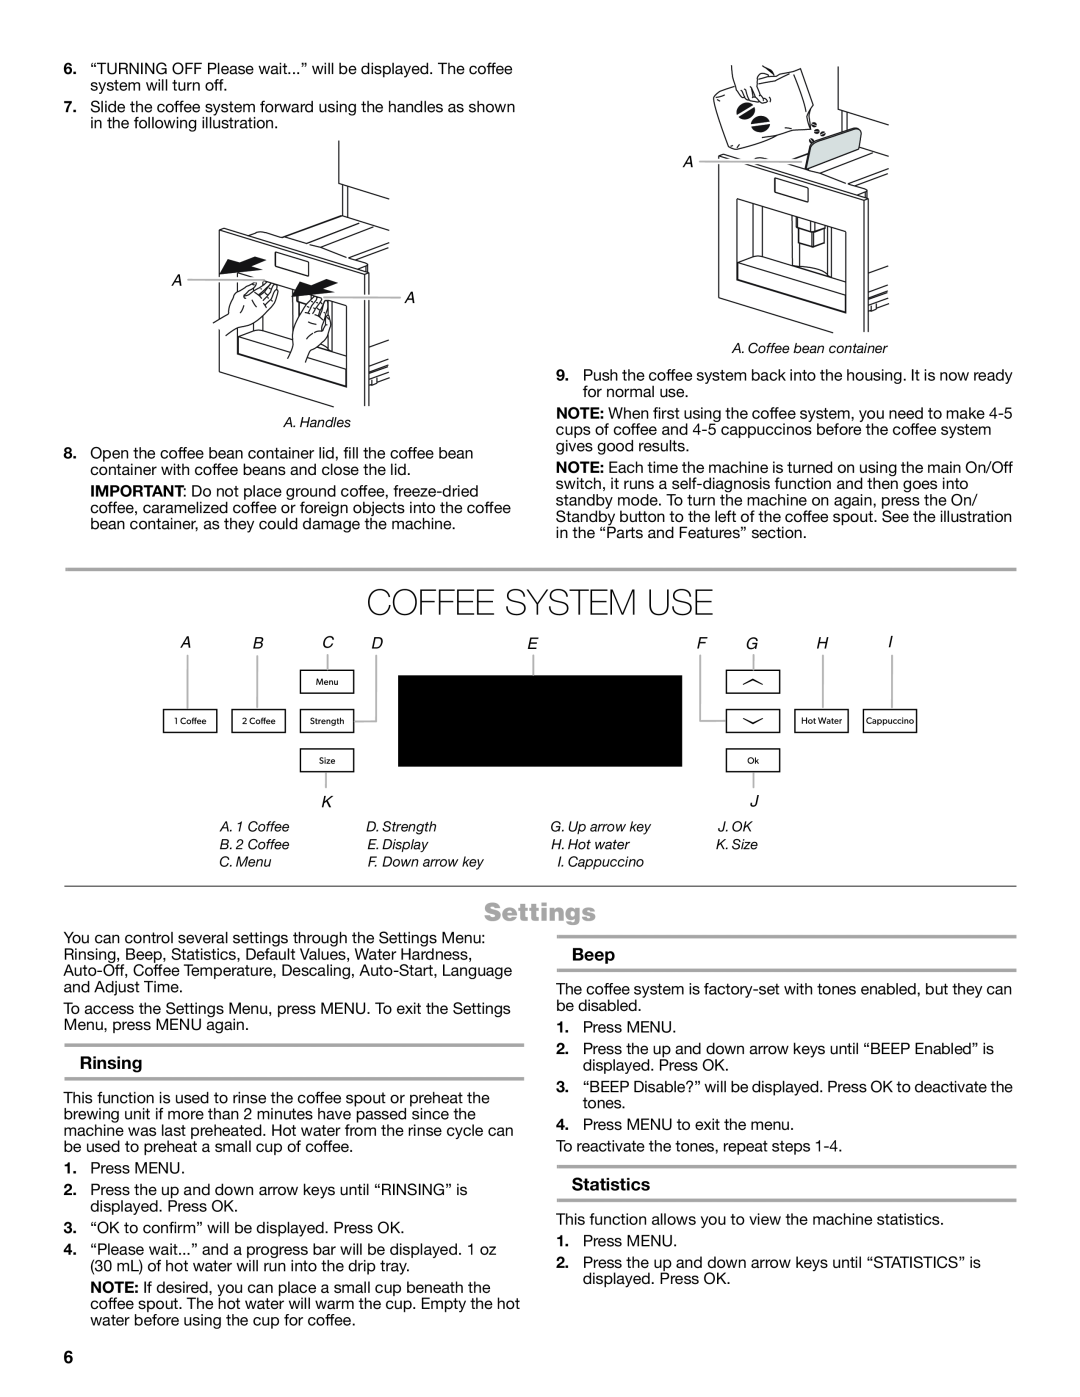 Jenn-Air JBC7624BS manual Coffee System Use, Settings, Rinsing, Beep, Statistics, A B C Def G H 